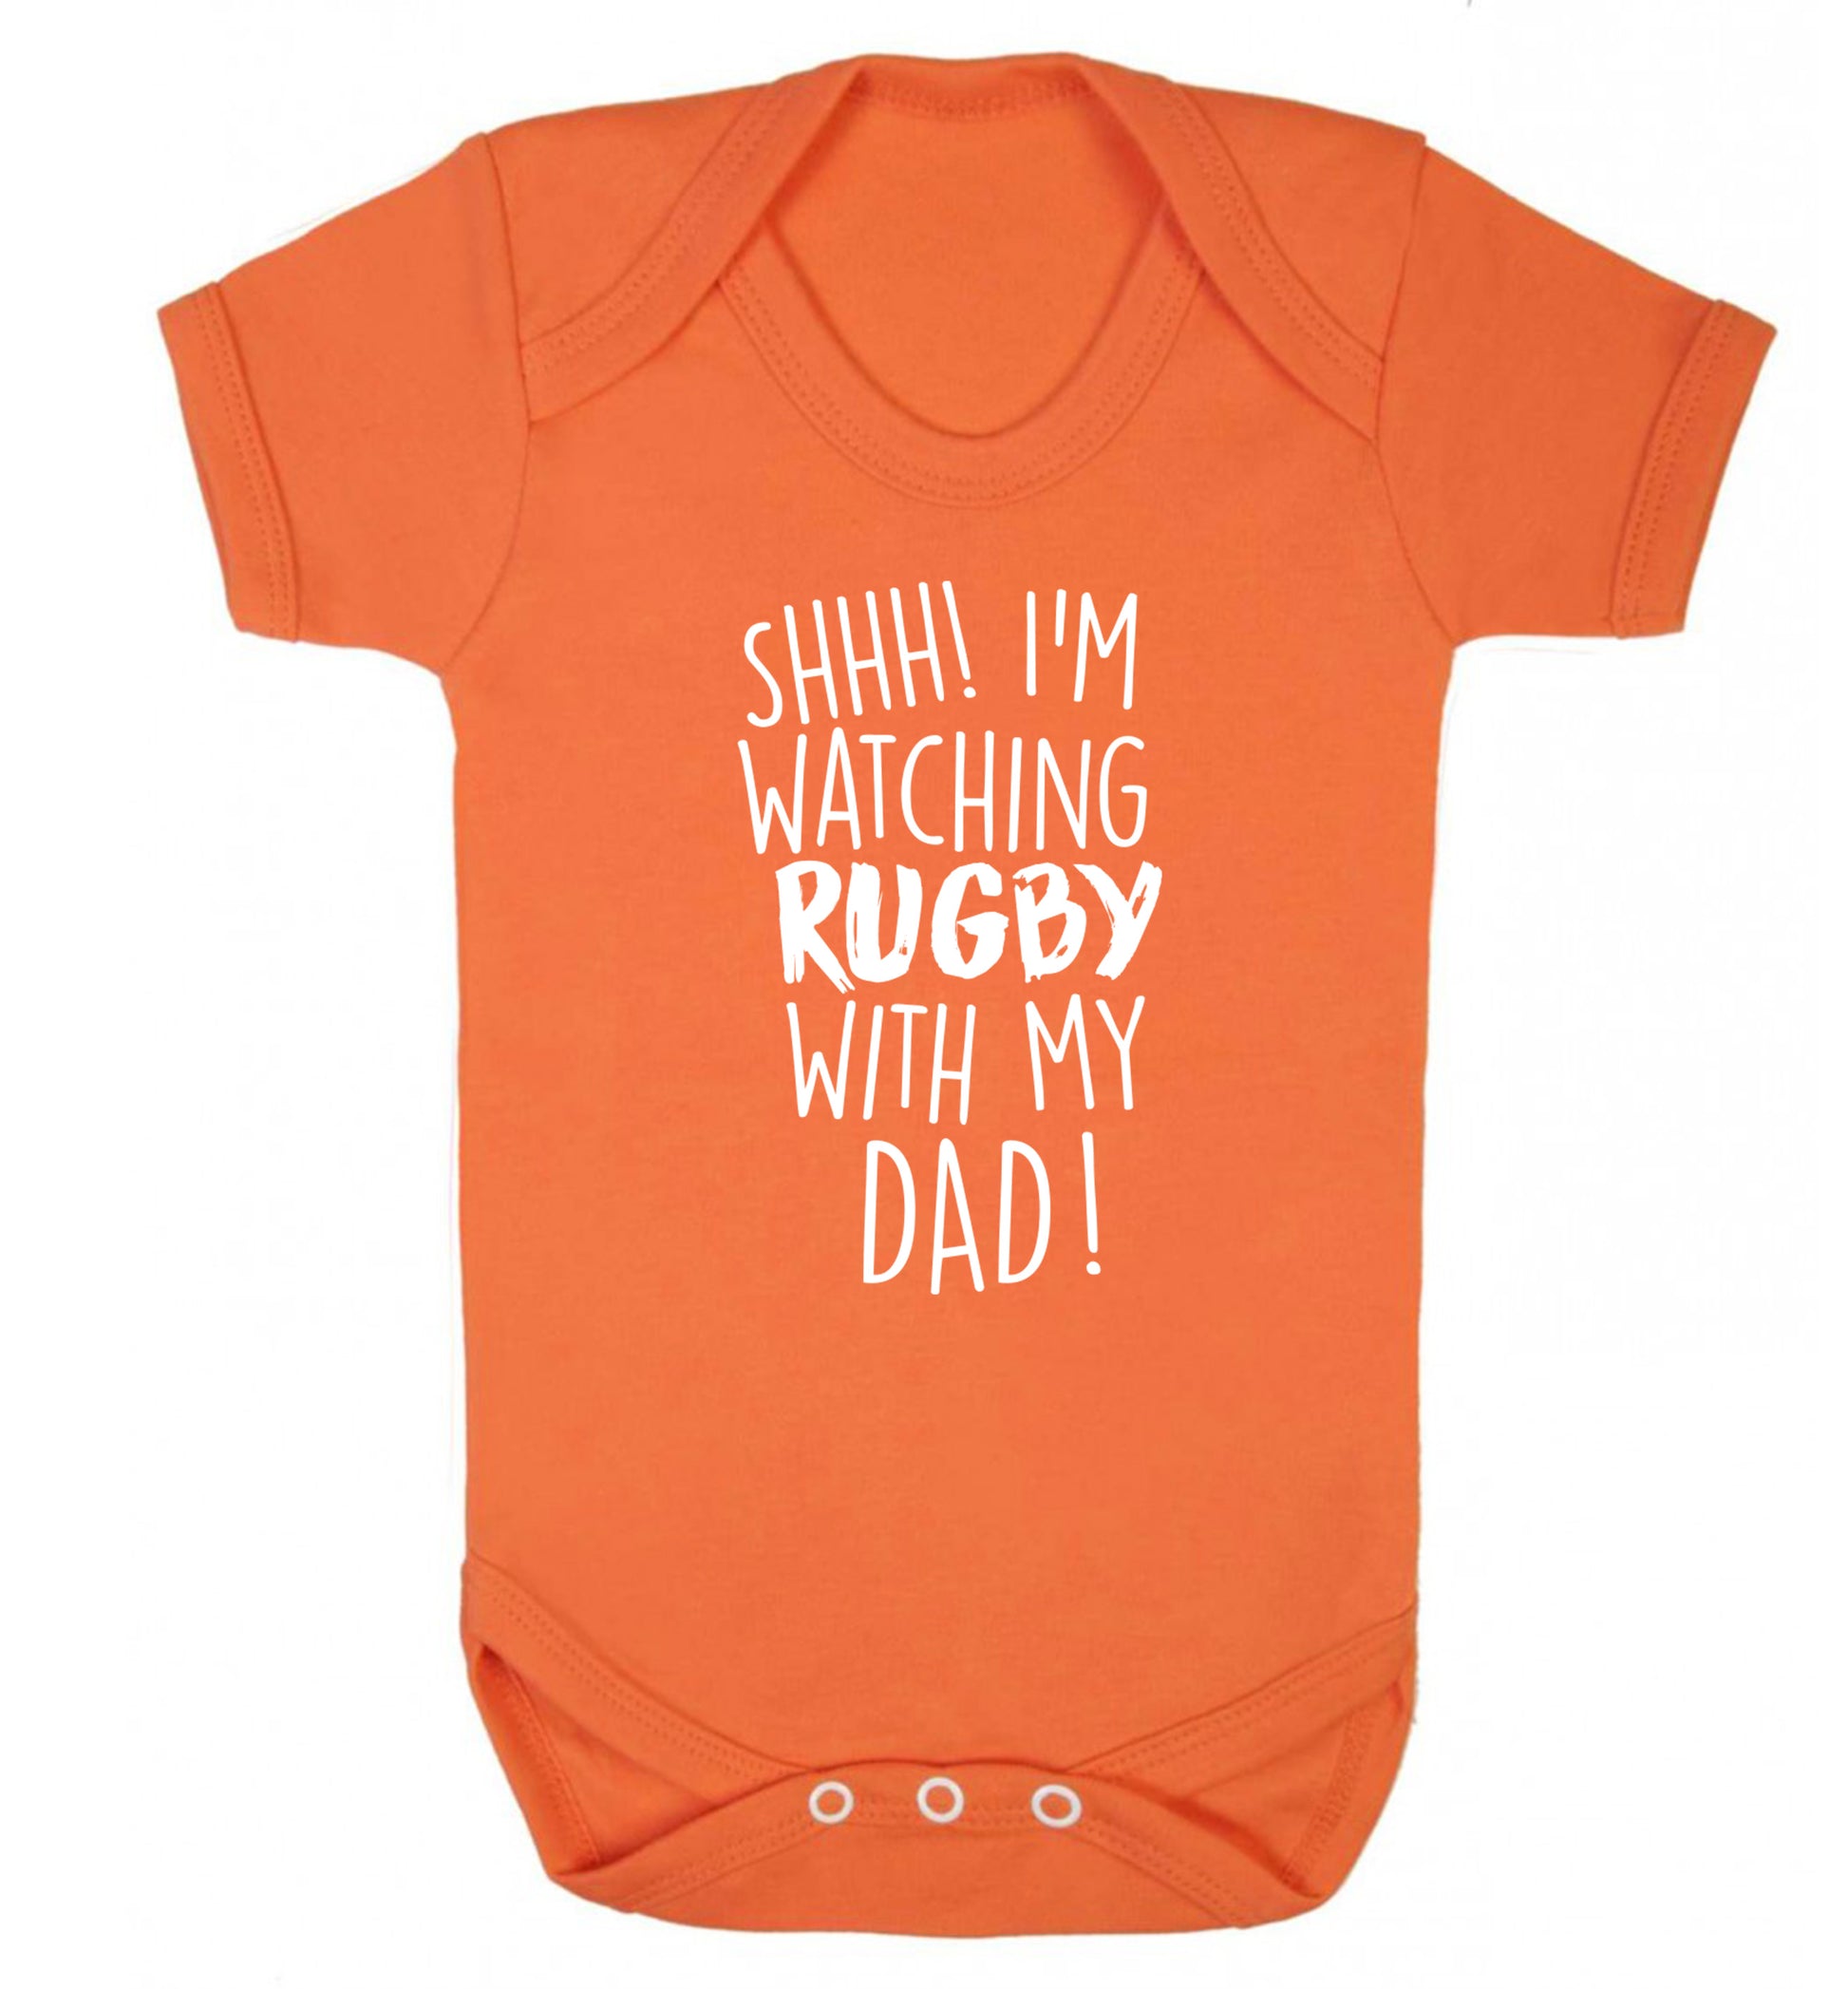 Shh... I'm watching rugby with my dad Baby Vest orange 18-24 months